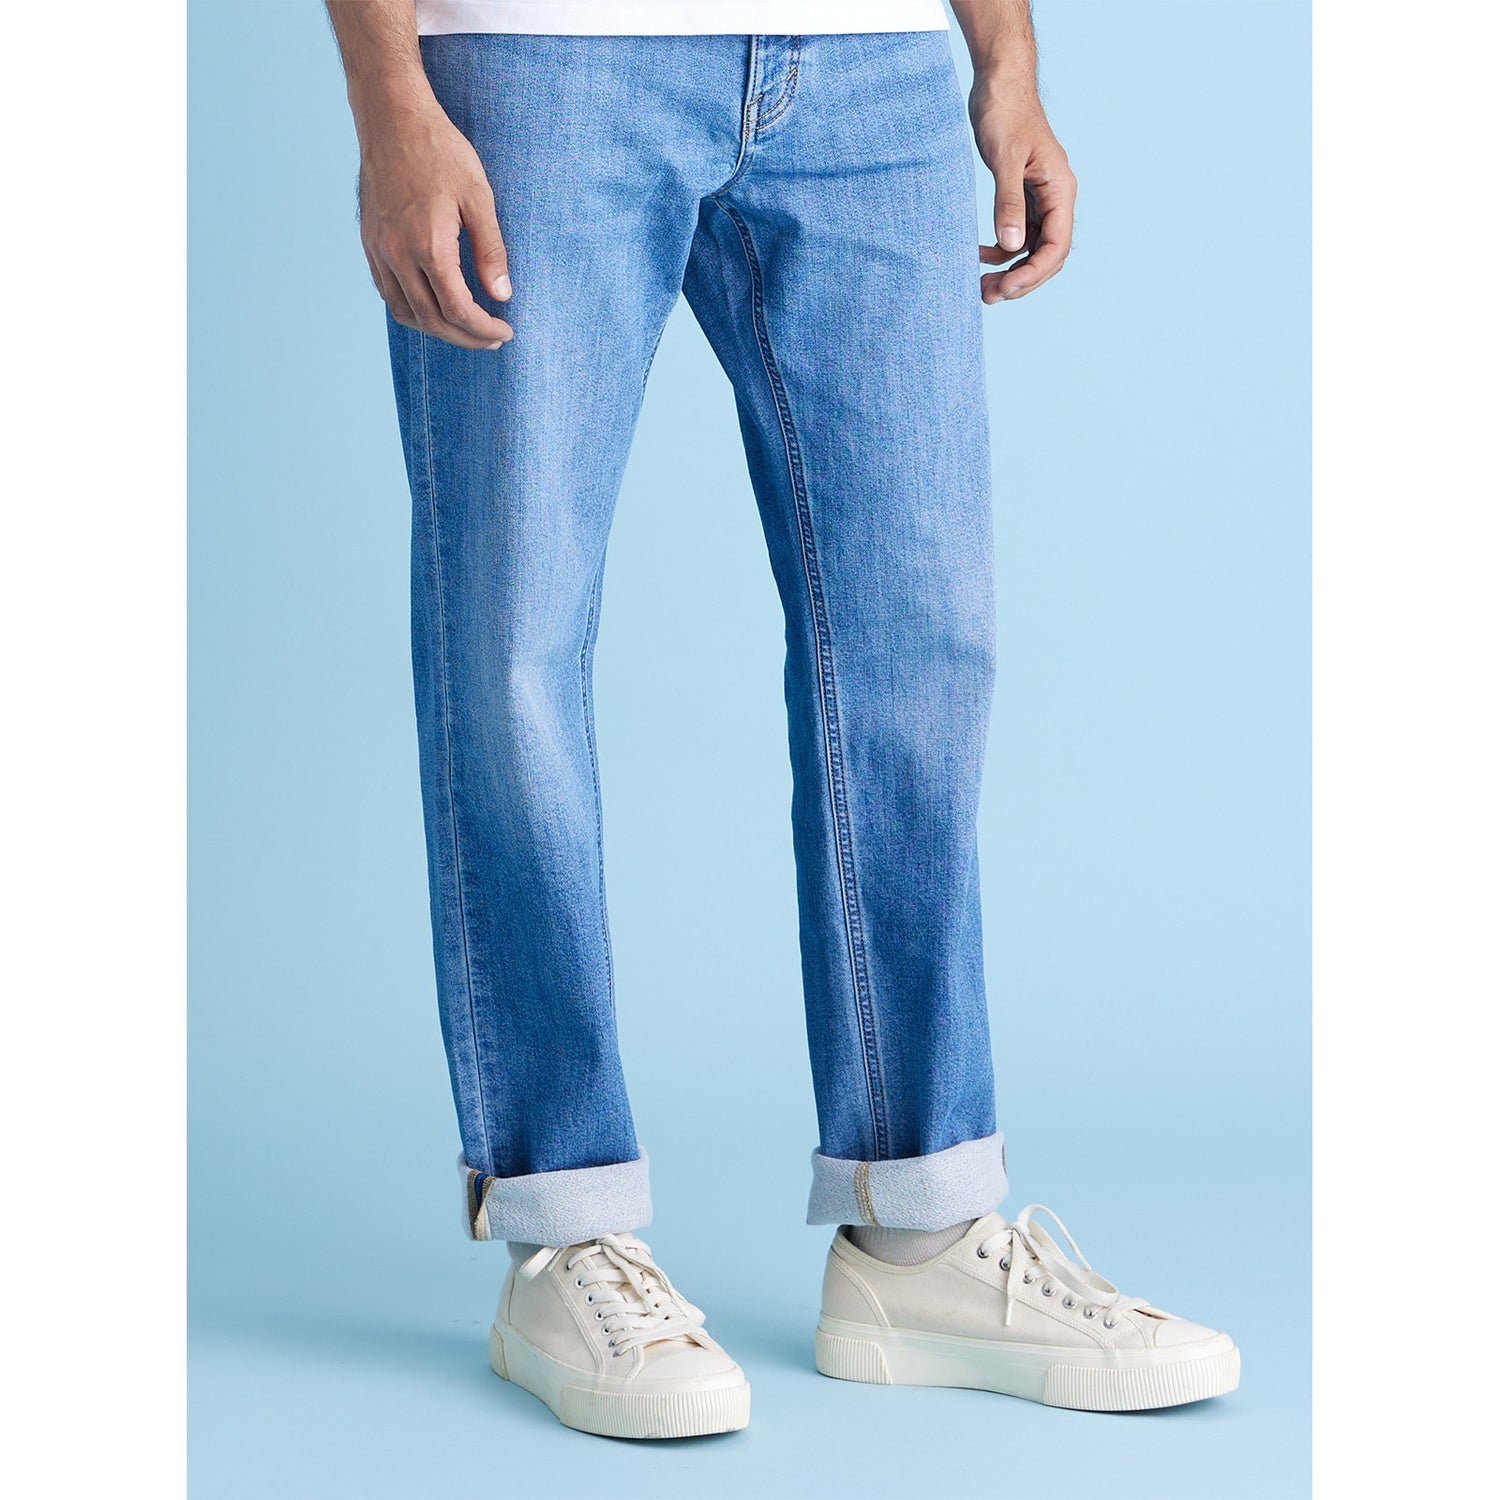 Blue Boyfriend Fit Heavy Fade Stretchable Cotton Jeans (DOKLIGHT15)